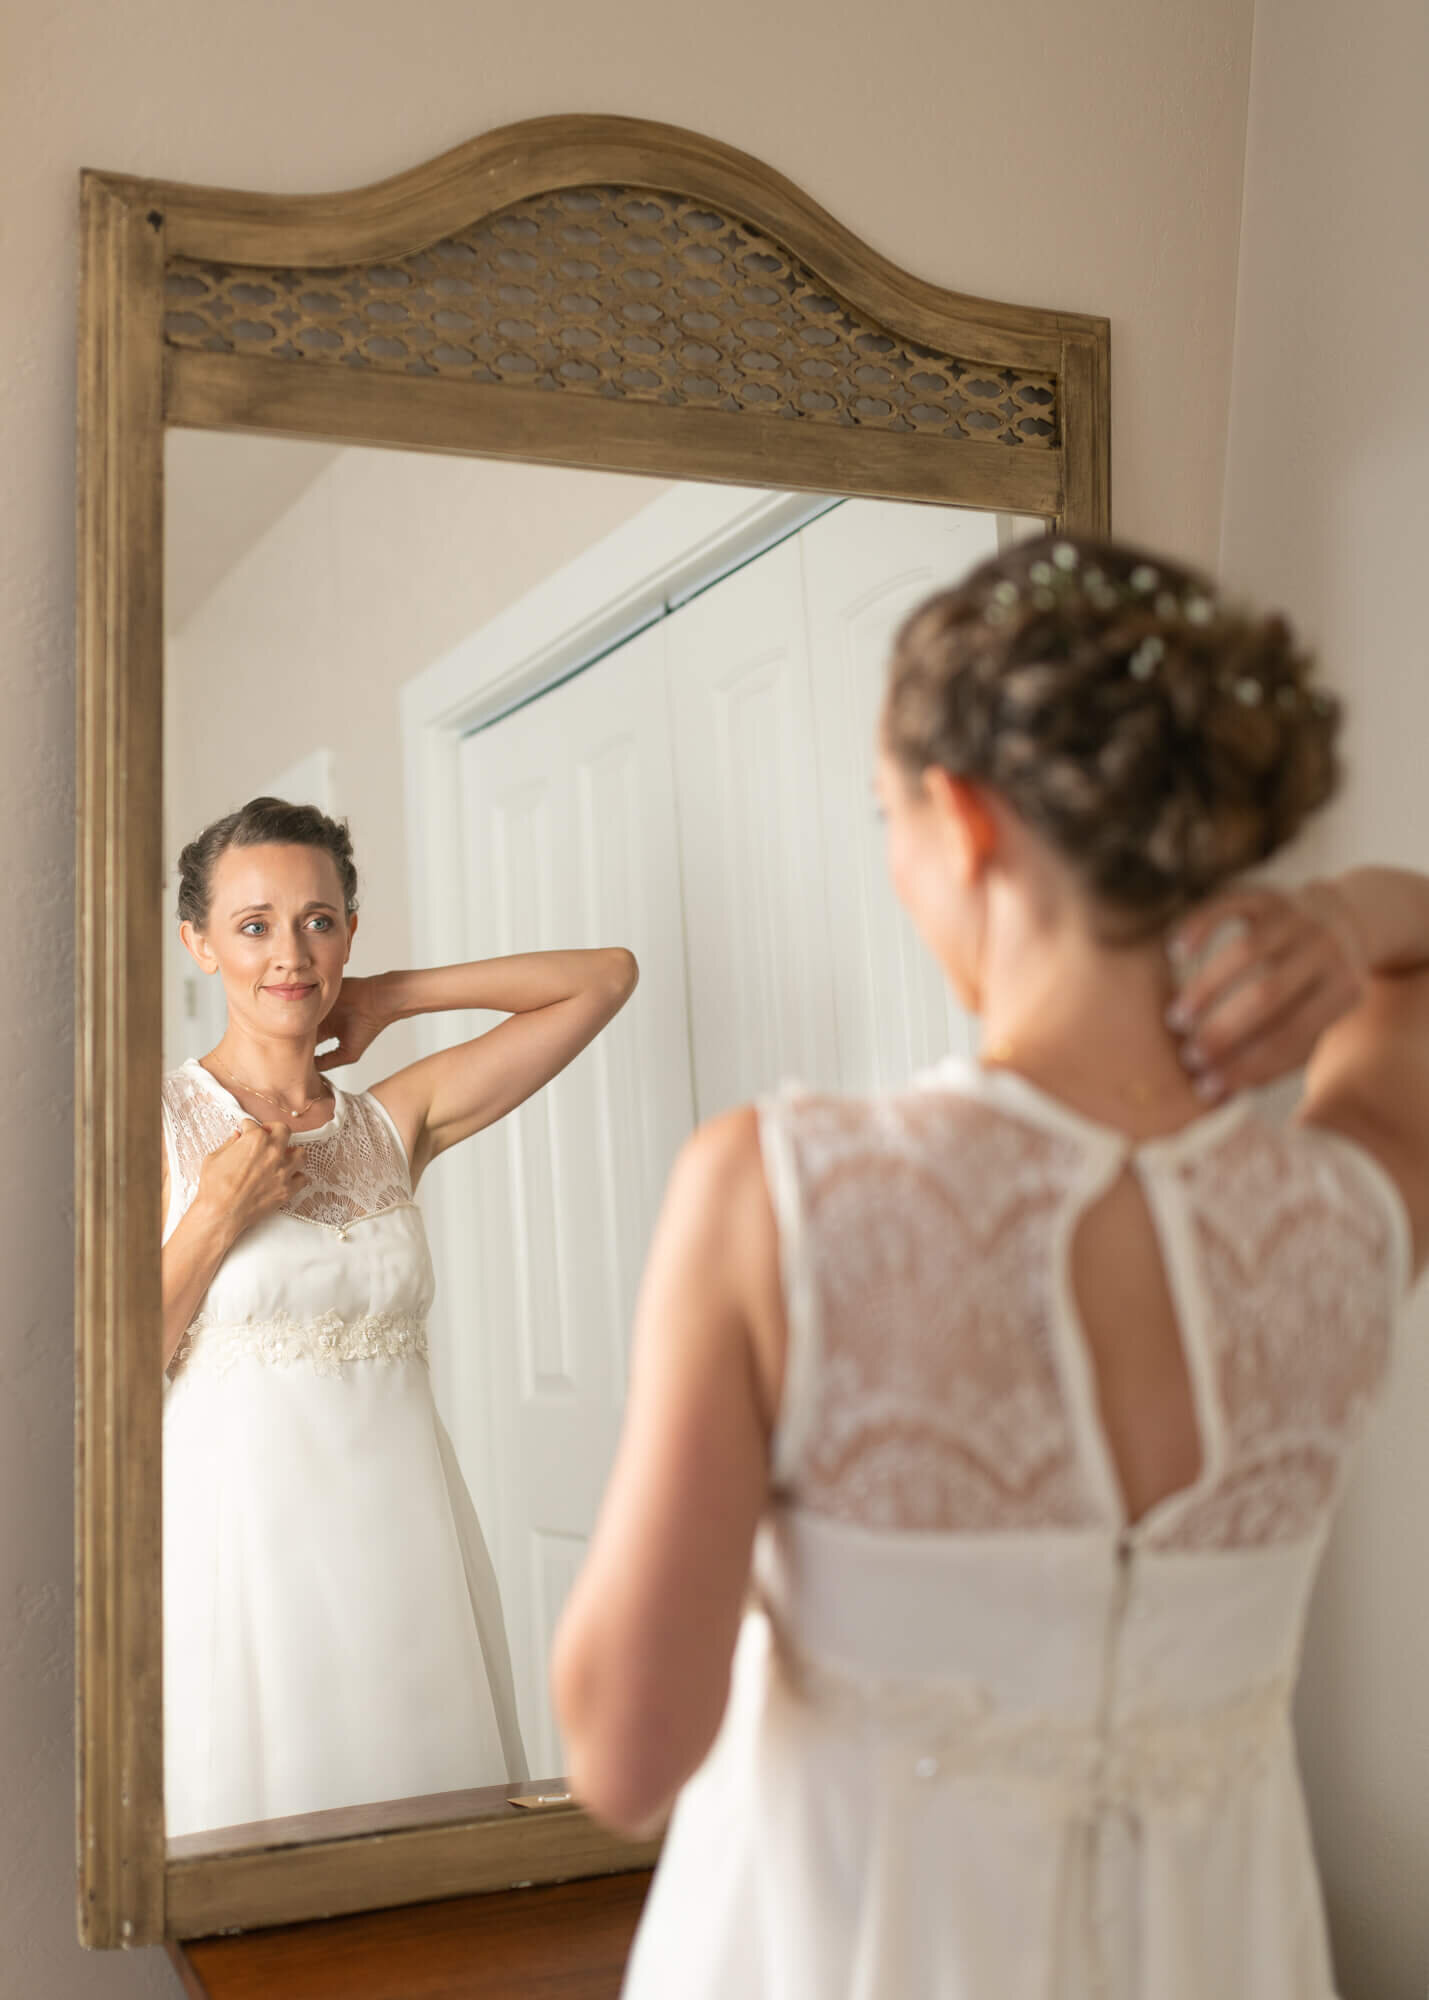 Bride looking in mirror adjusting her necklace